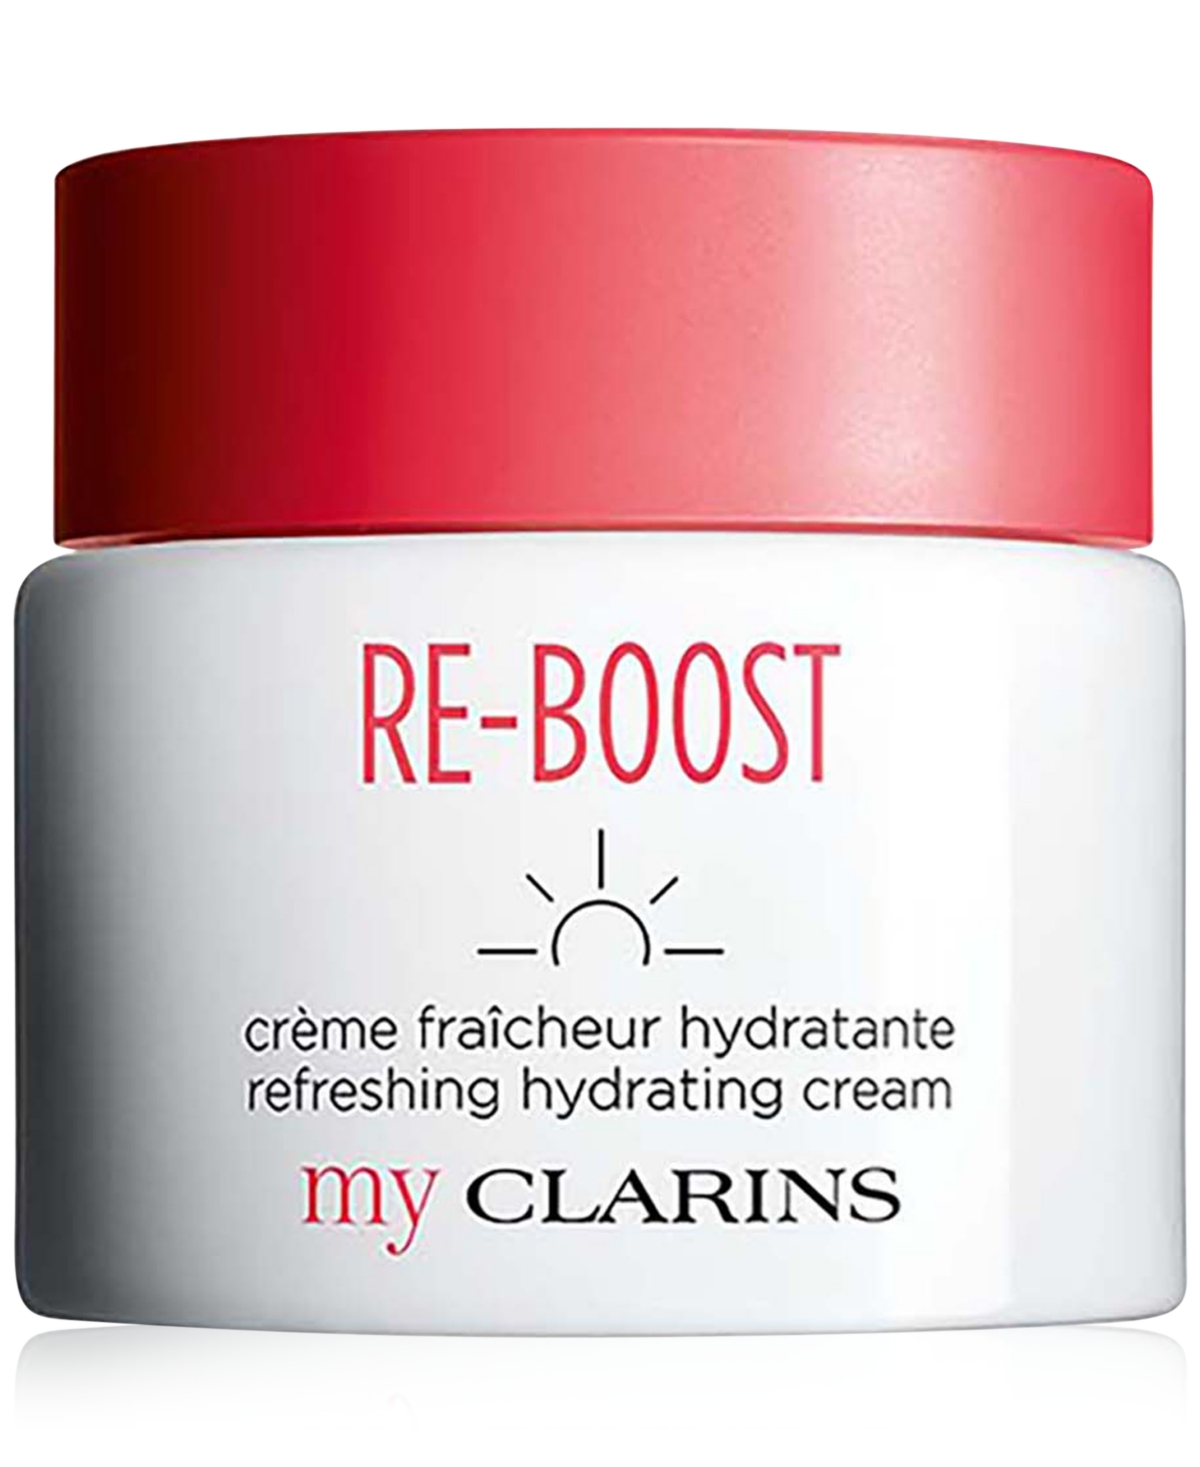 Re-boost Refreshing Hydrating Cream